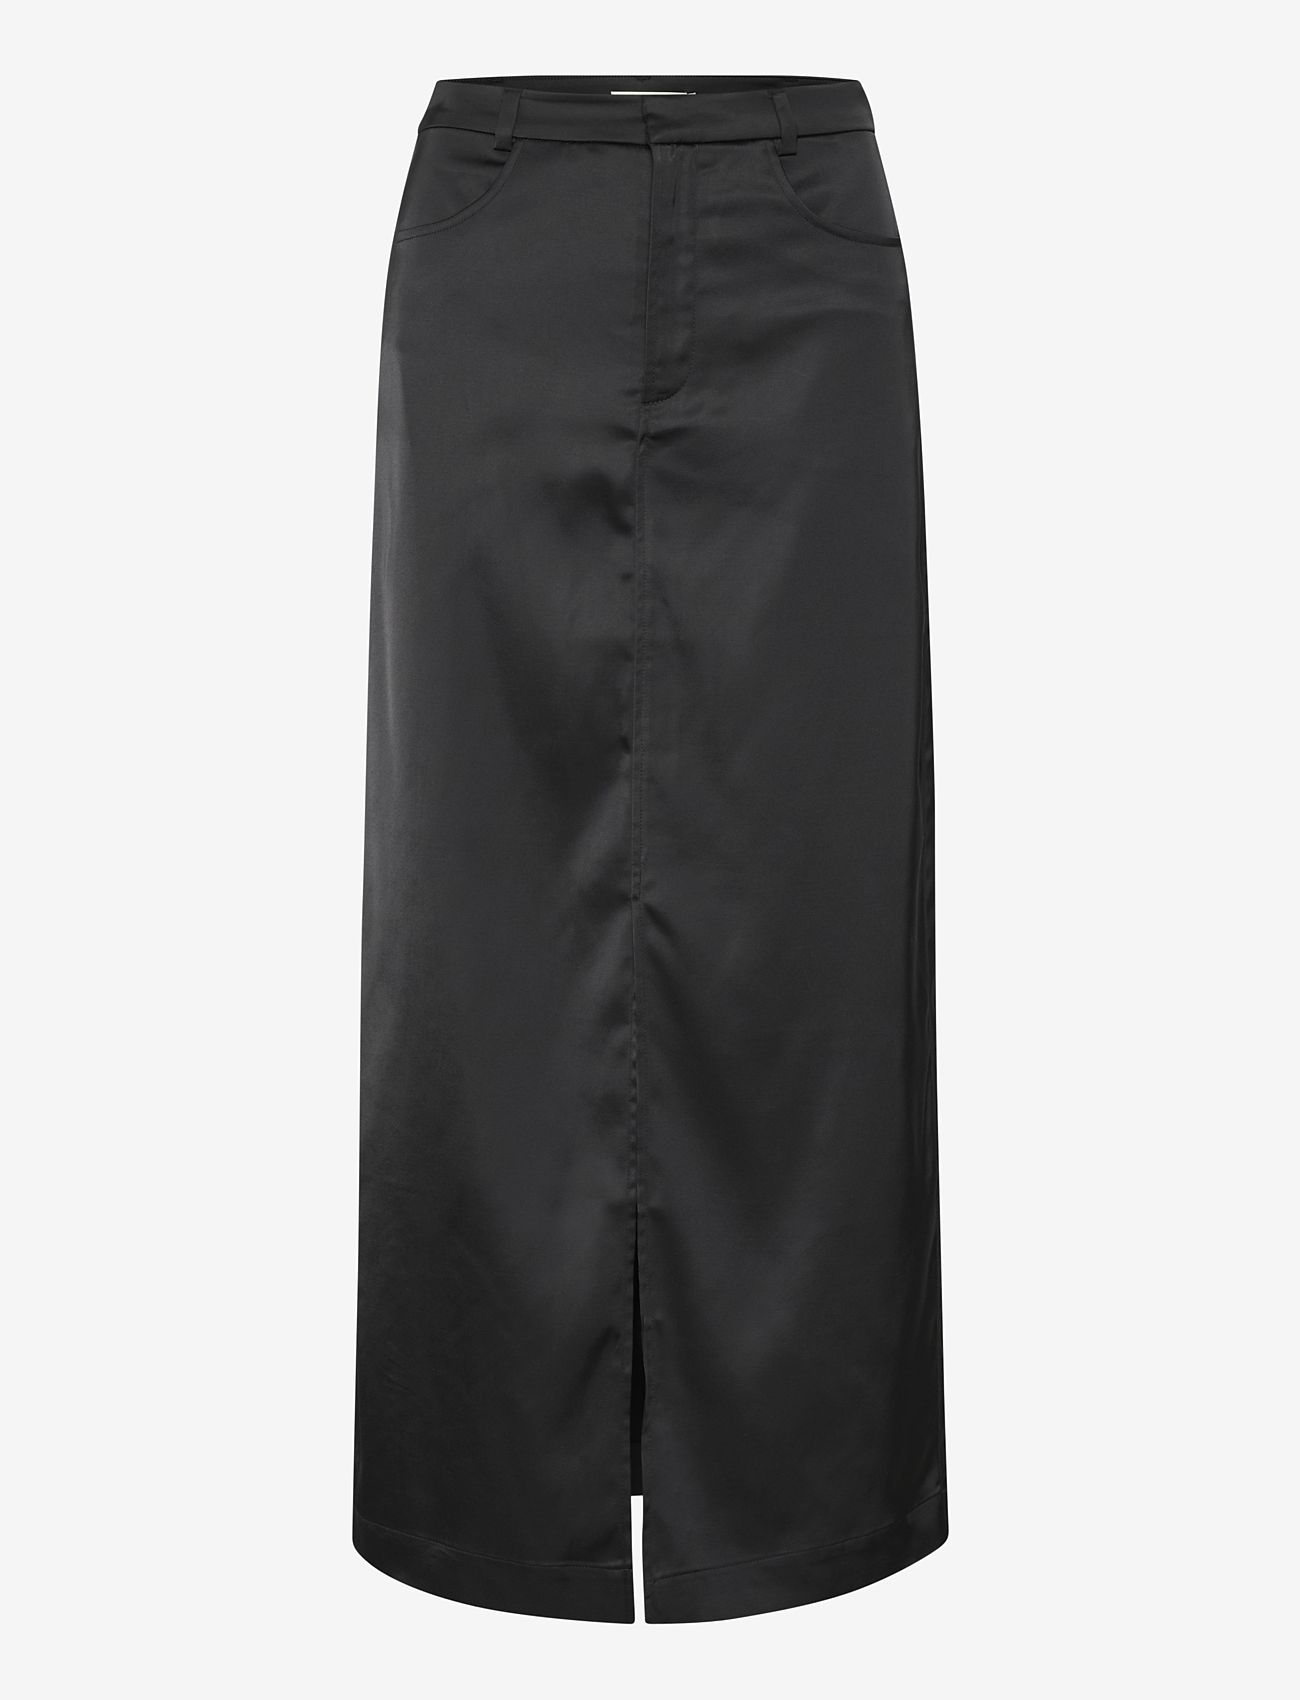 Gestuz - YacmineGZ MW skirt - pencil skirts - black - 0